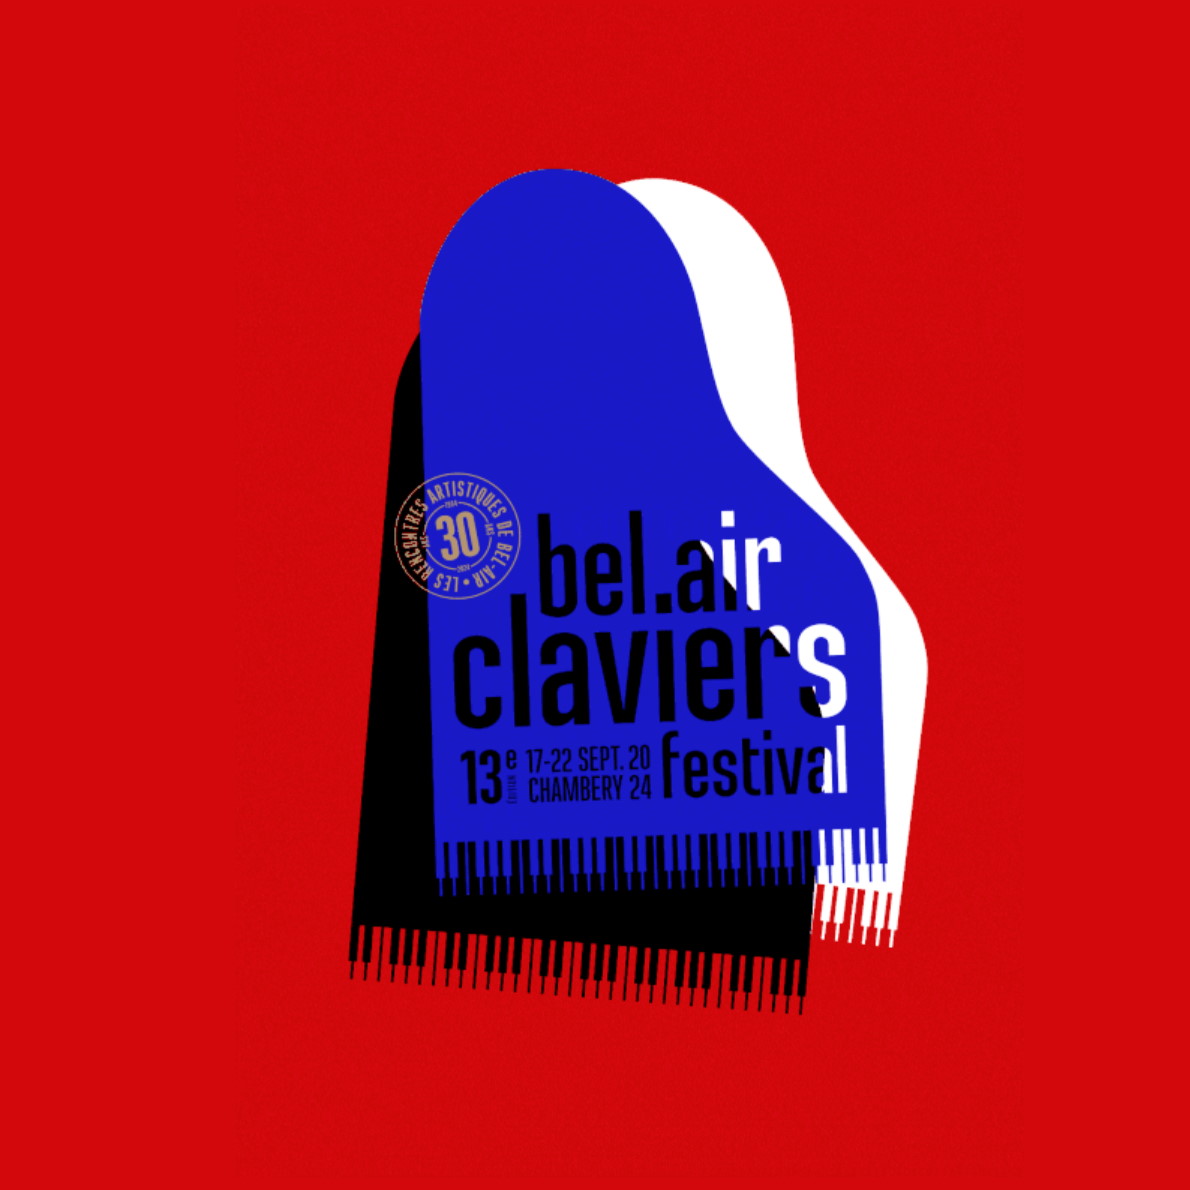 Bel-Air Claviers Festival